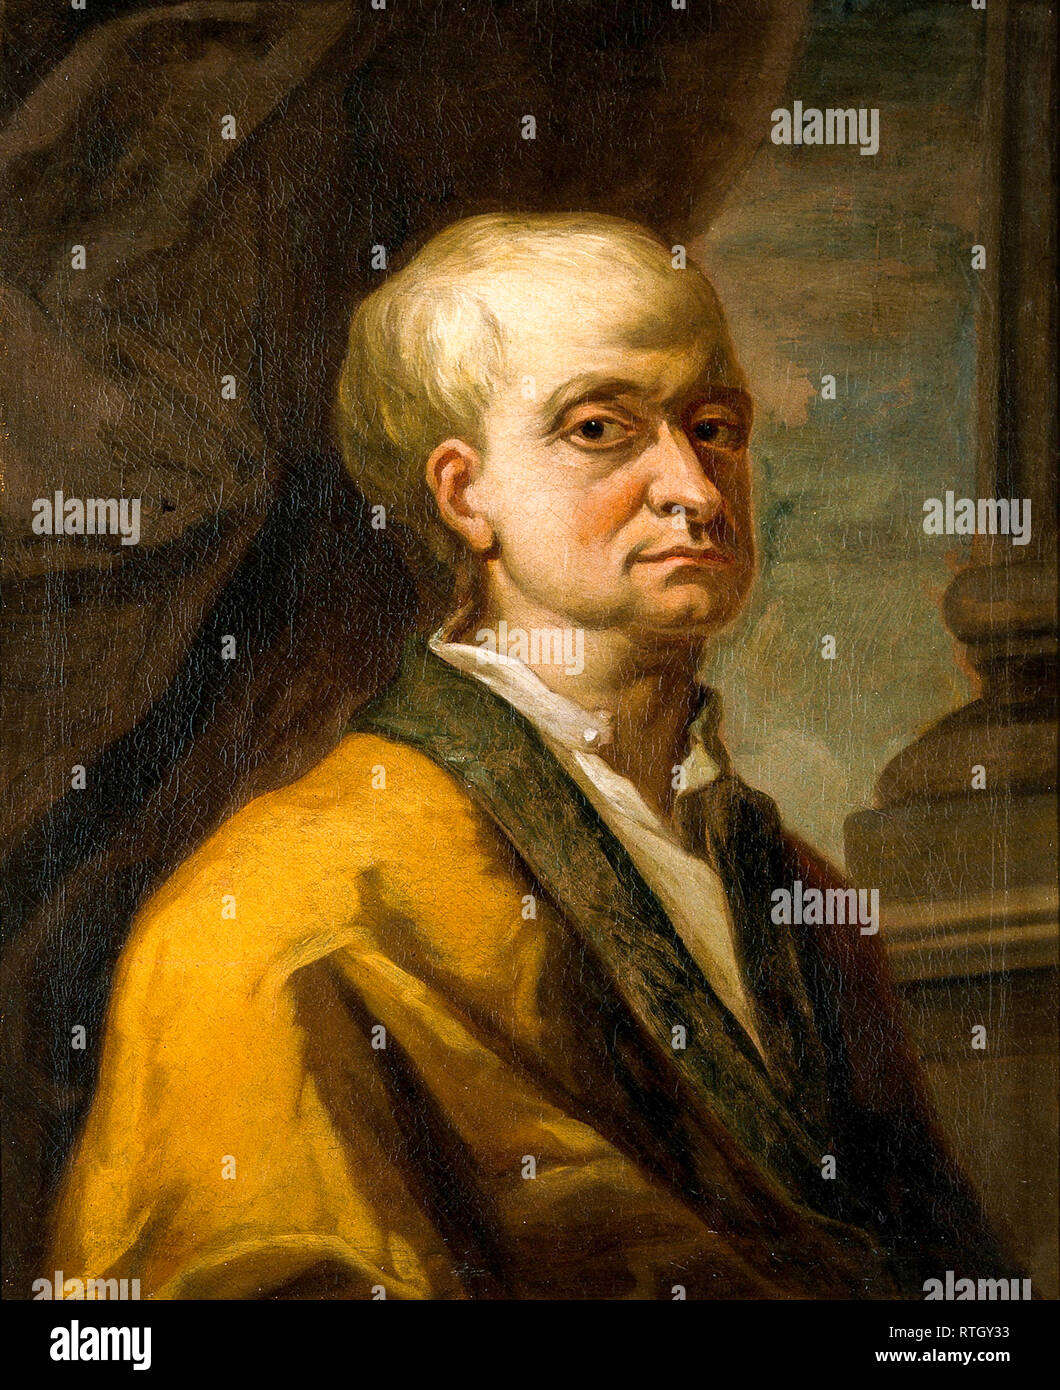 Sir Isaac Newton (1642-1727), portrait painting, 17th-18th Century Stock Photo